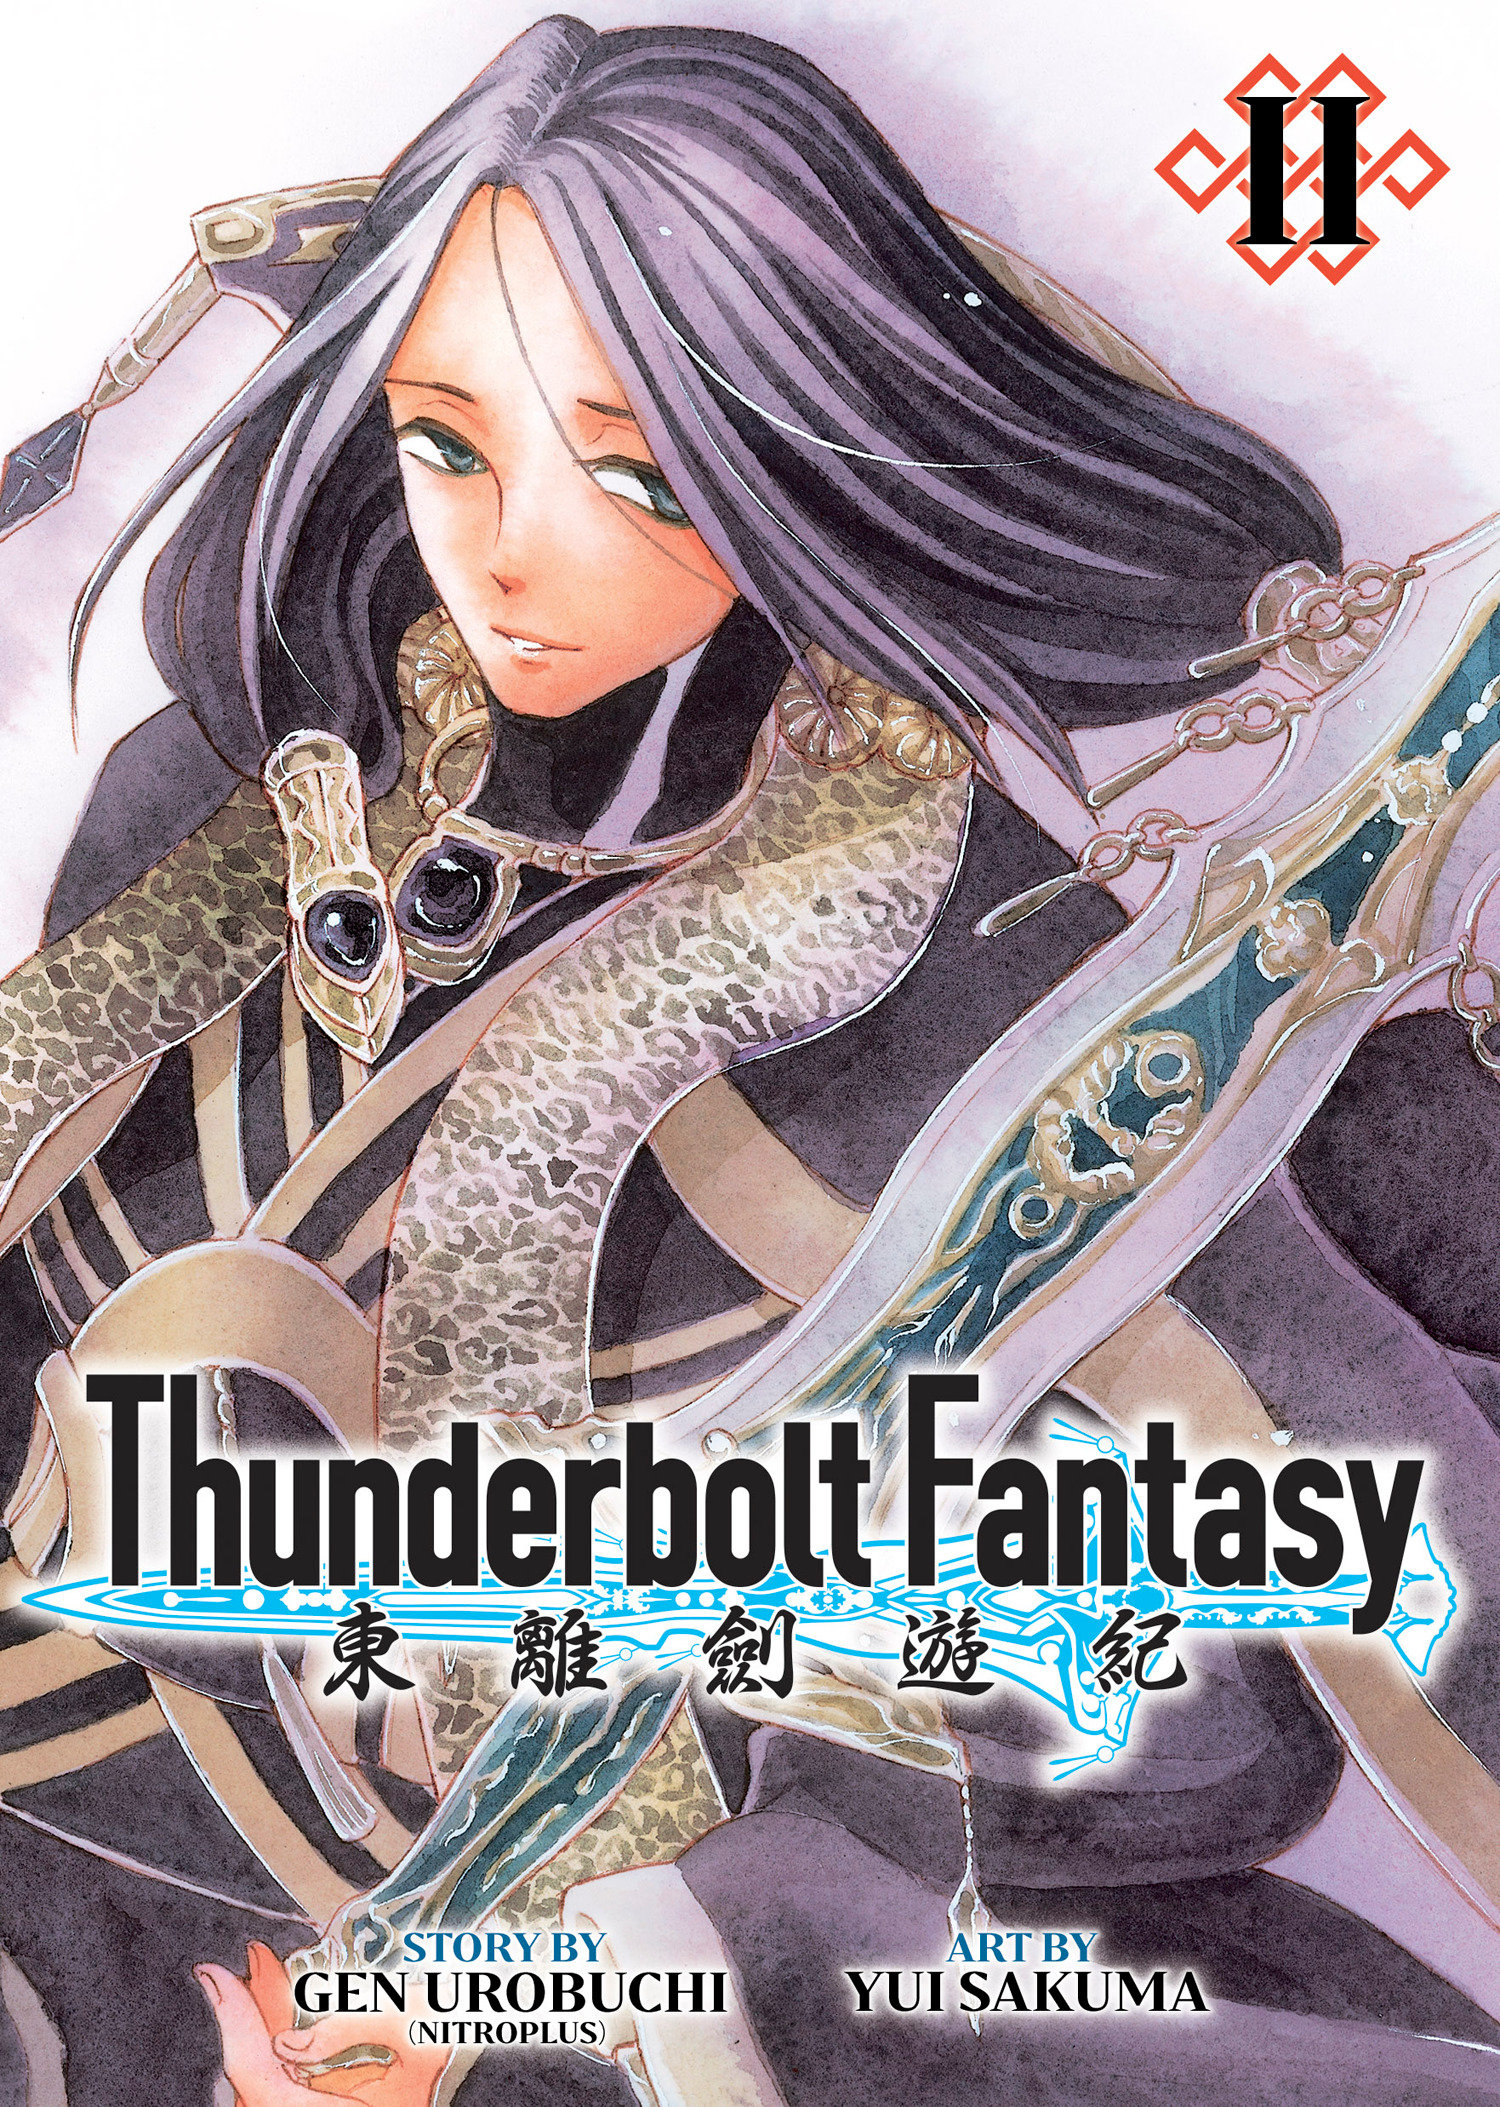 Thunderbolt Fantasy Omnibus Manga Volume 2